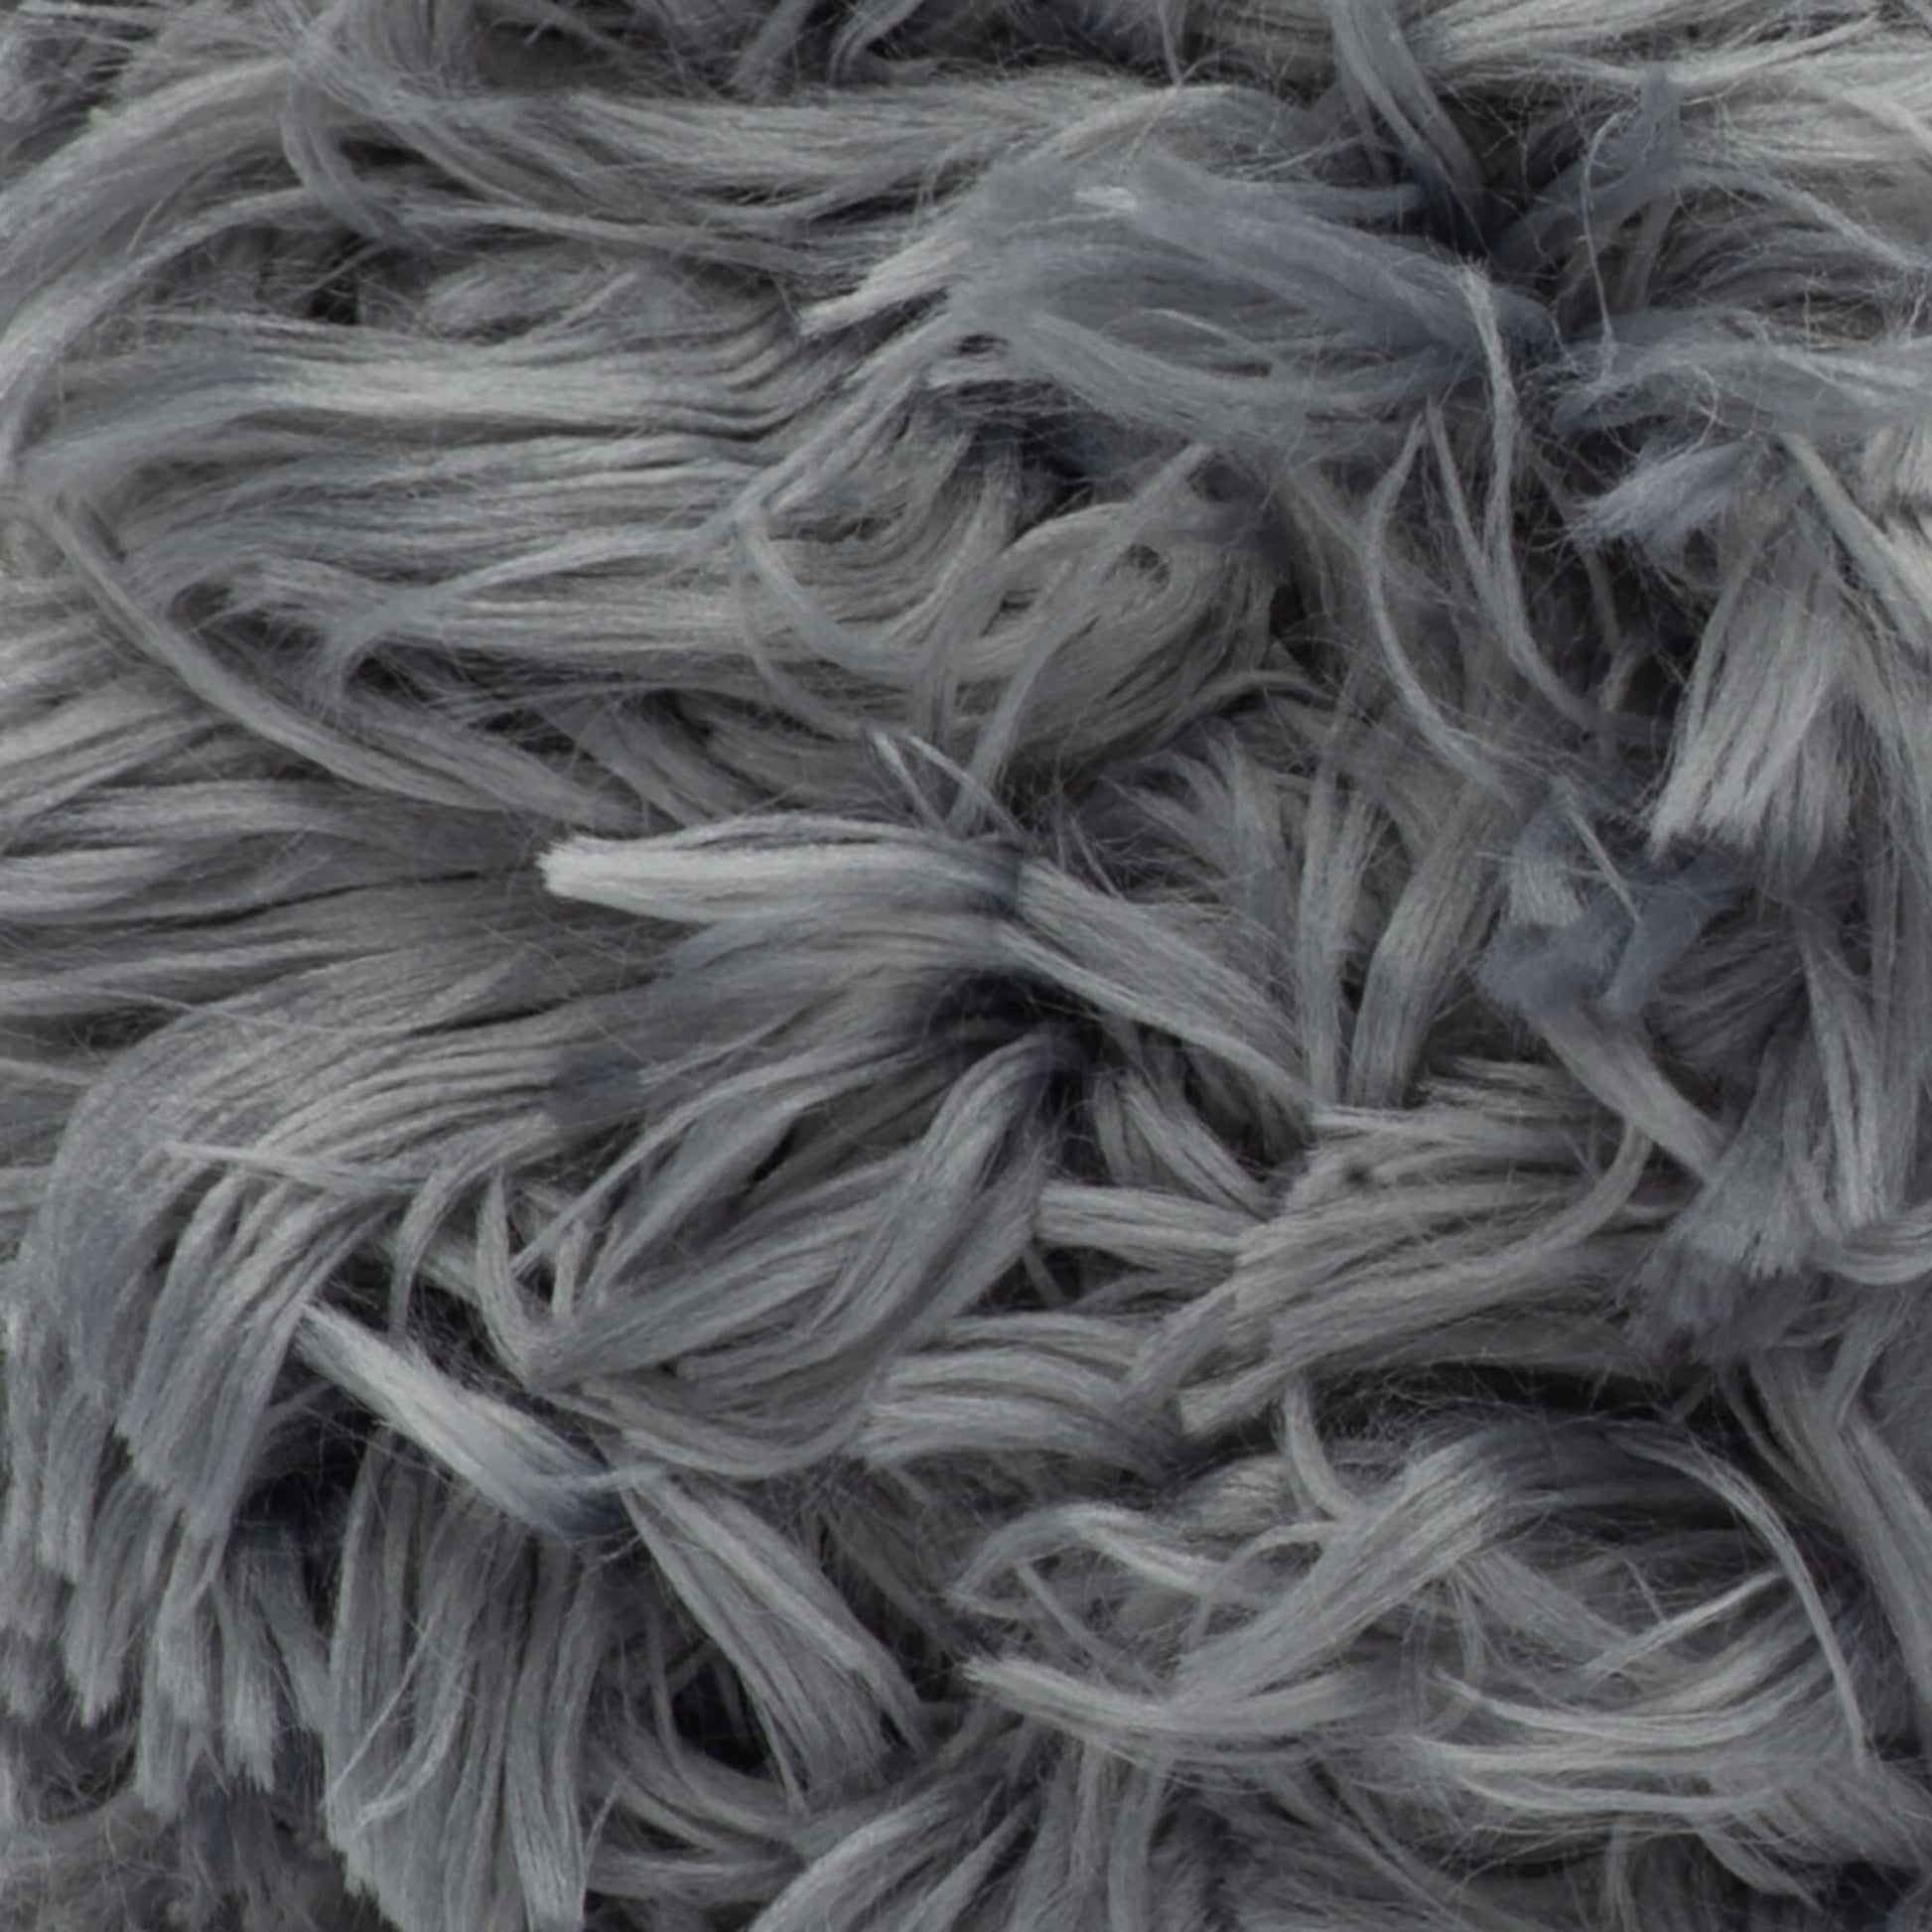 Loren Furry Knitting Yarn, Grey - RF006